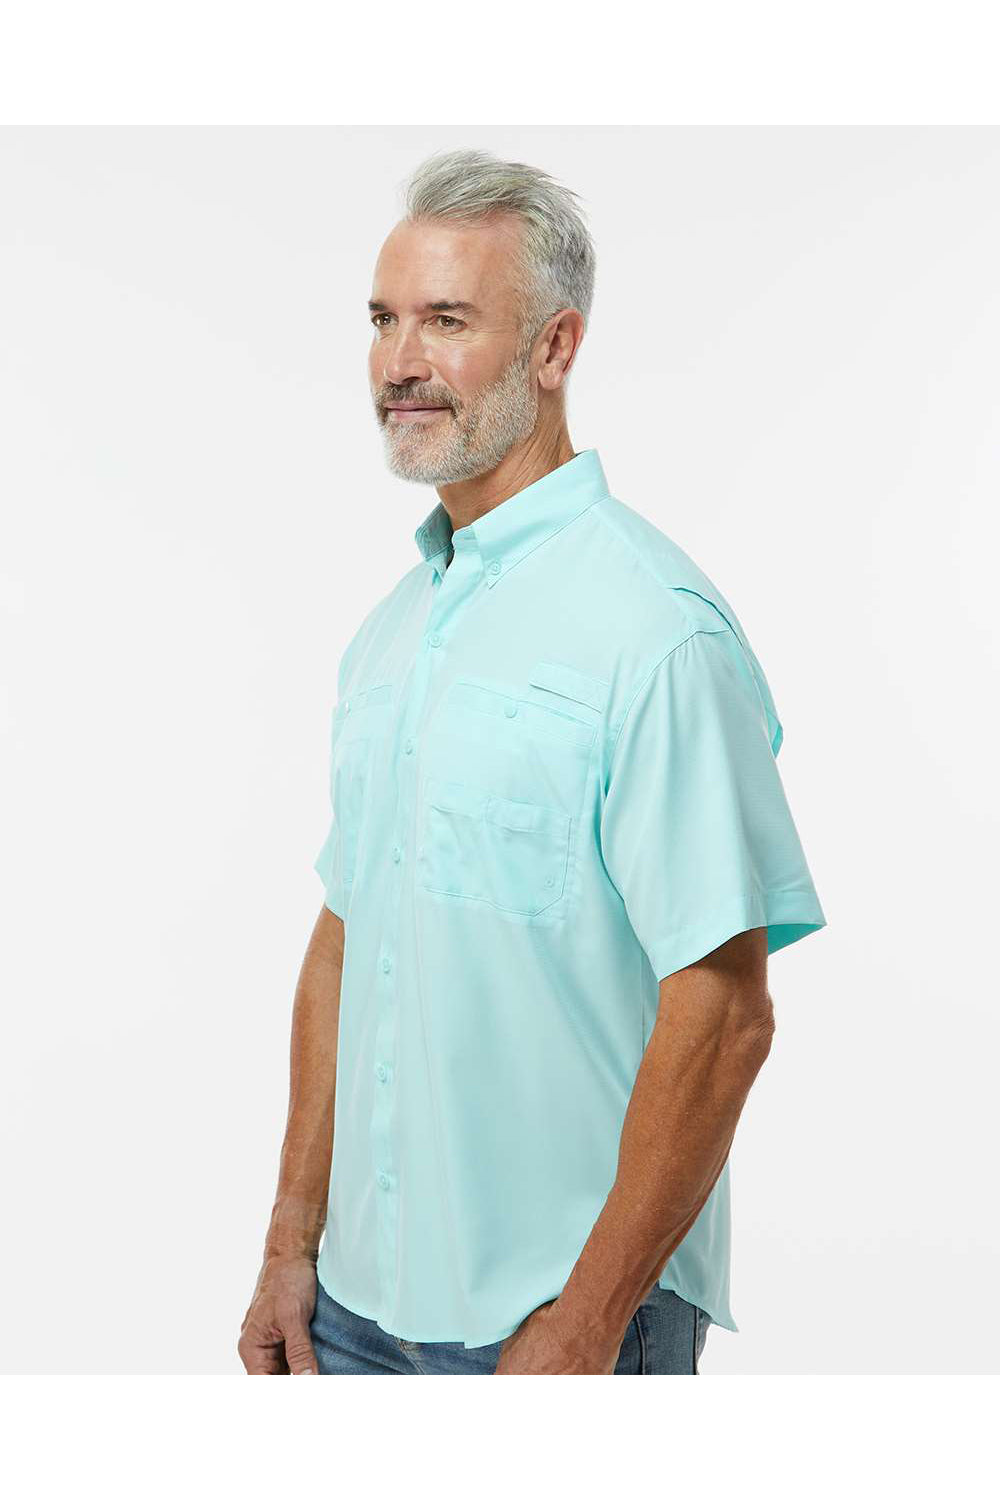 Paragon 700 Mens Hatteras Performance Short Sleeve Button Down Shirt Aqua Blue Model Side